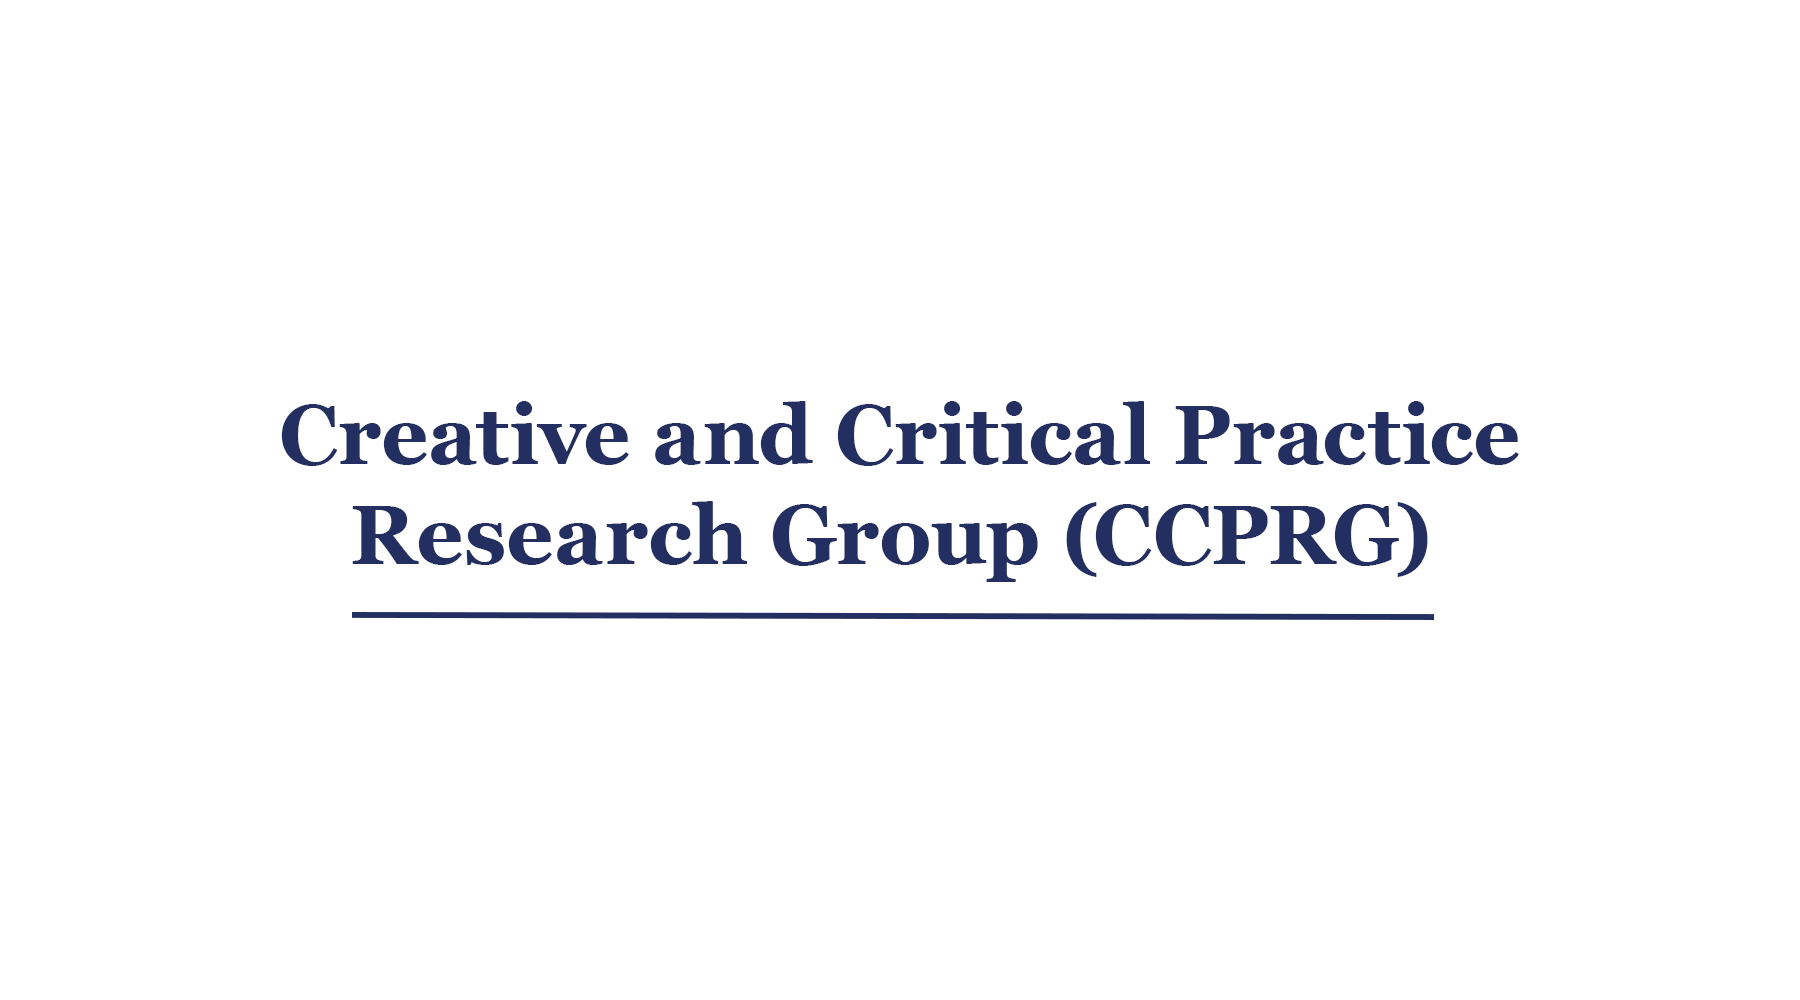 CCPRG Branding